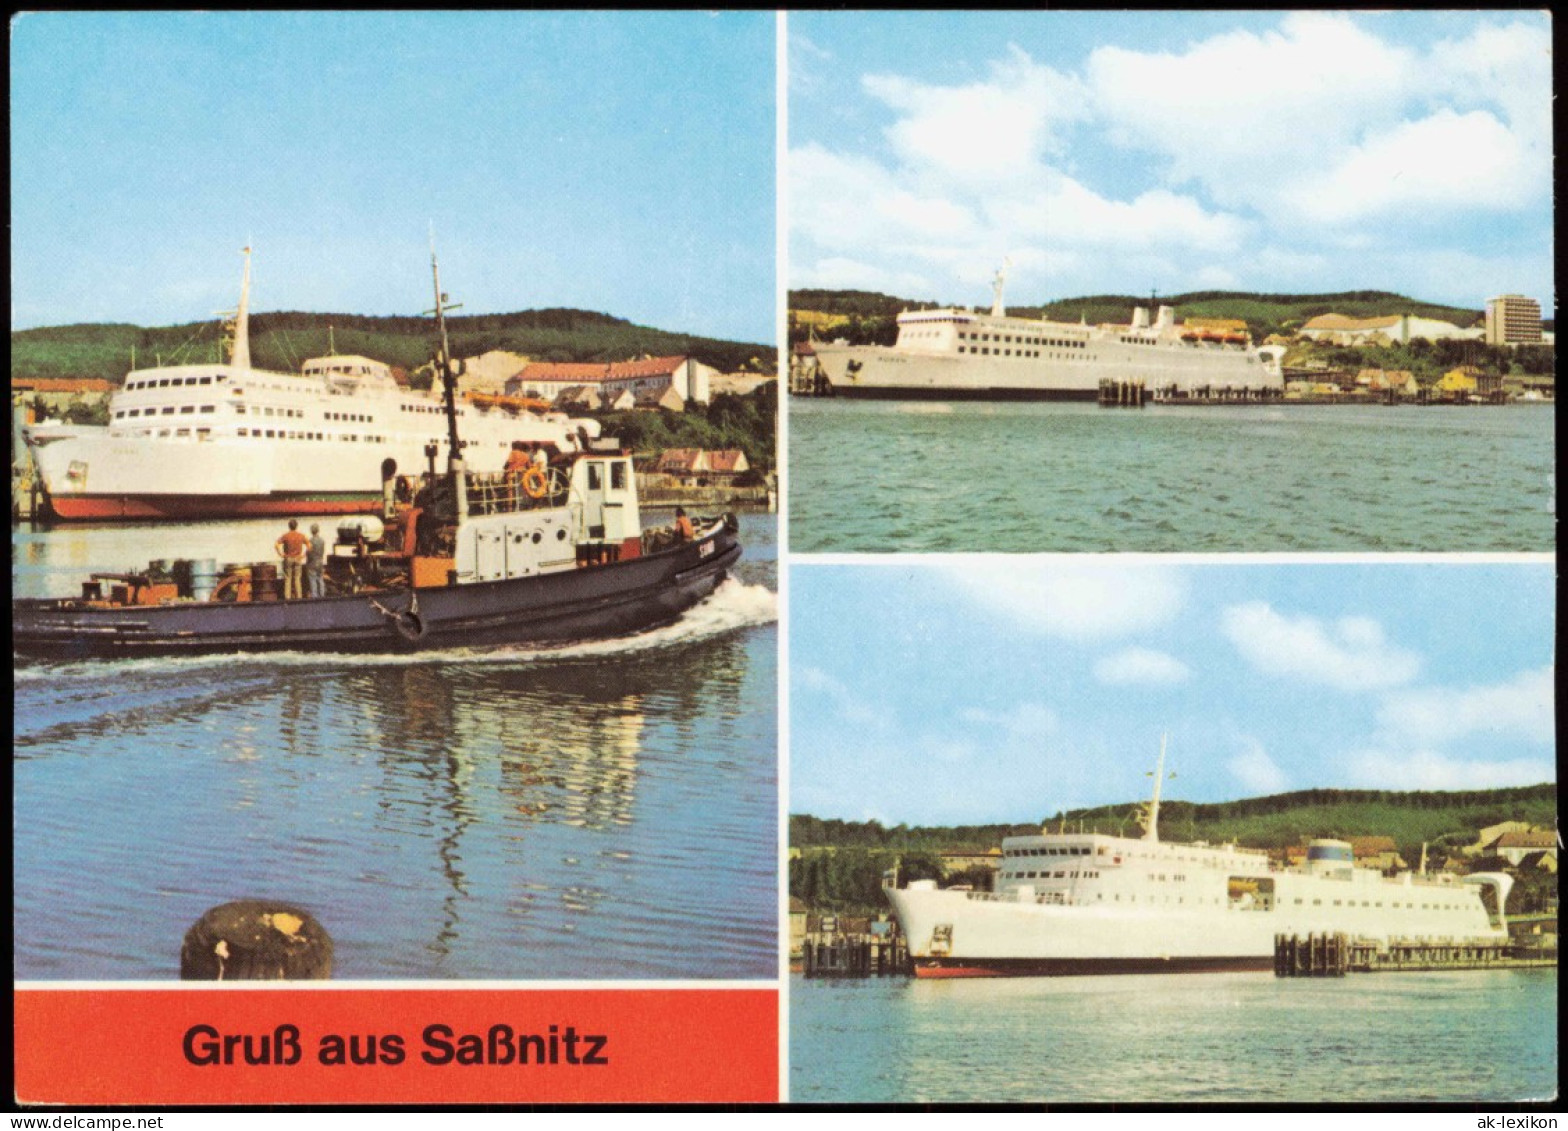 Sassnitz Schwedenfähre  Eisenbahnfährschiff "Rügen" Fährschiff "Svealand"  1979 - Sassnitz